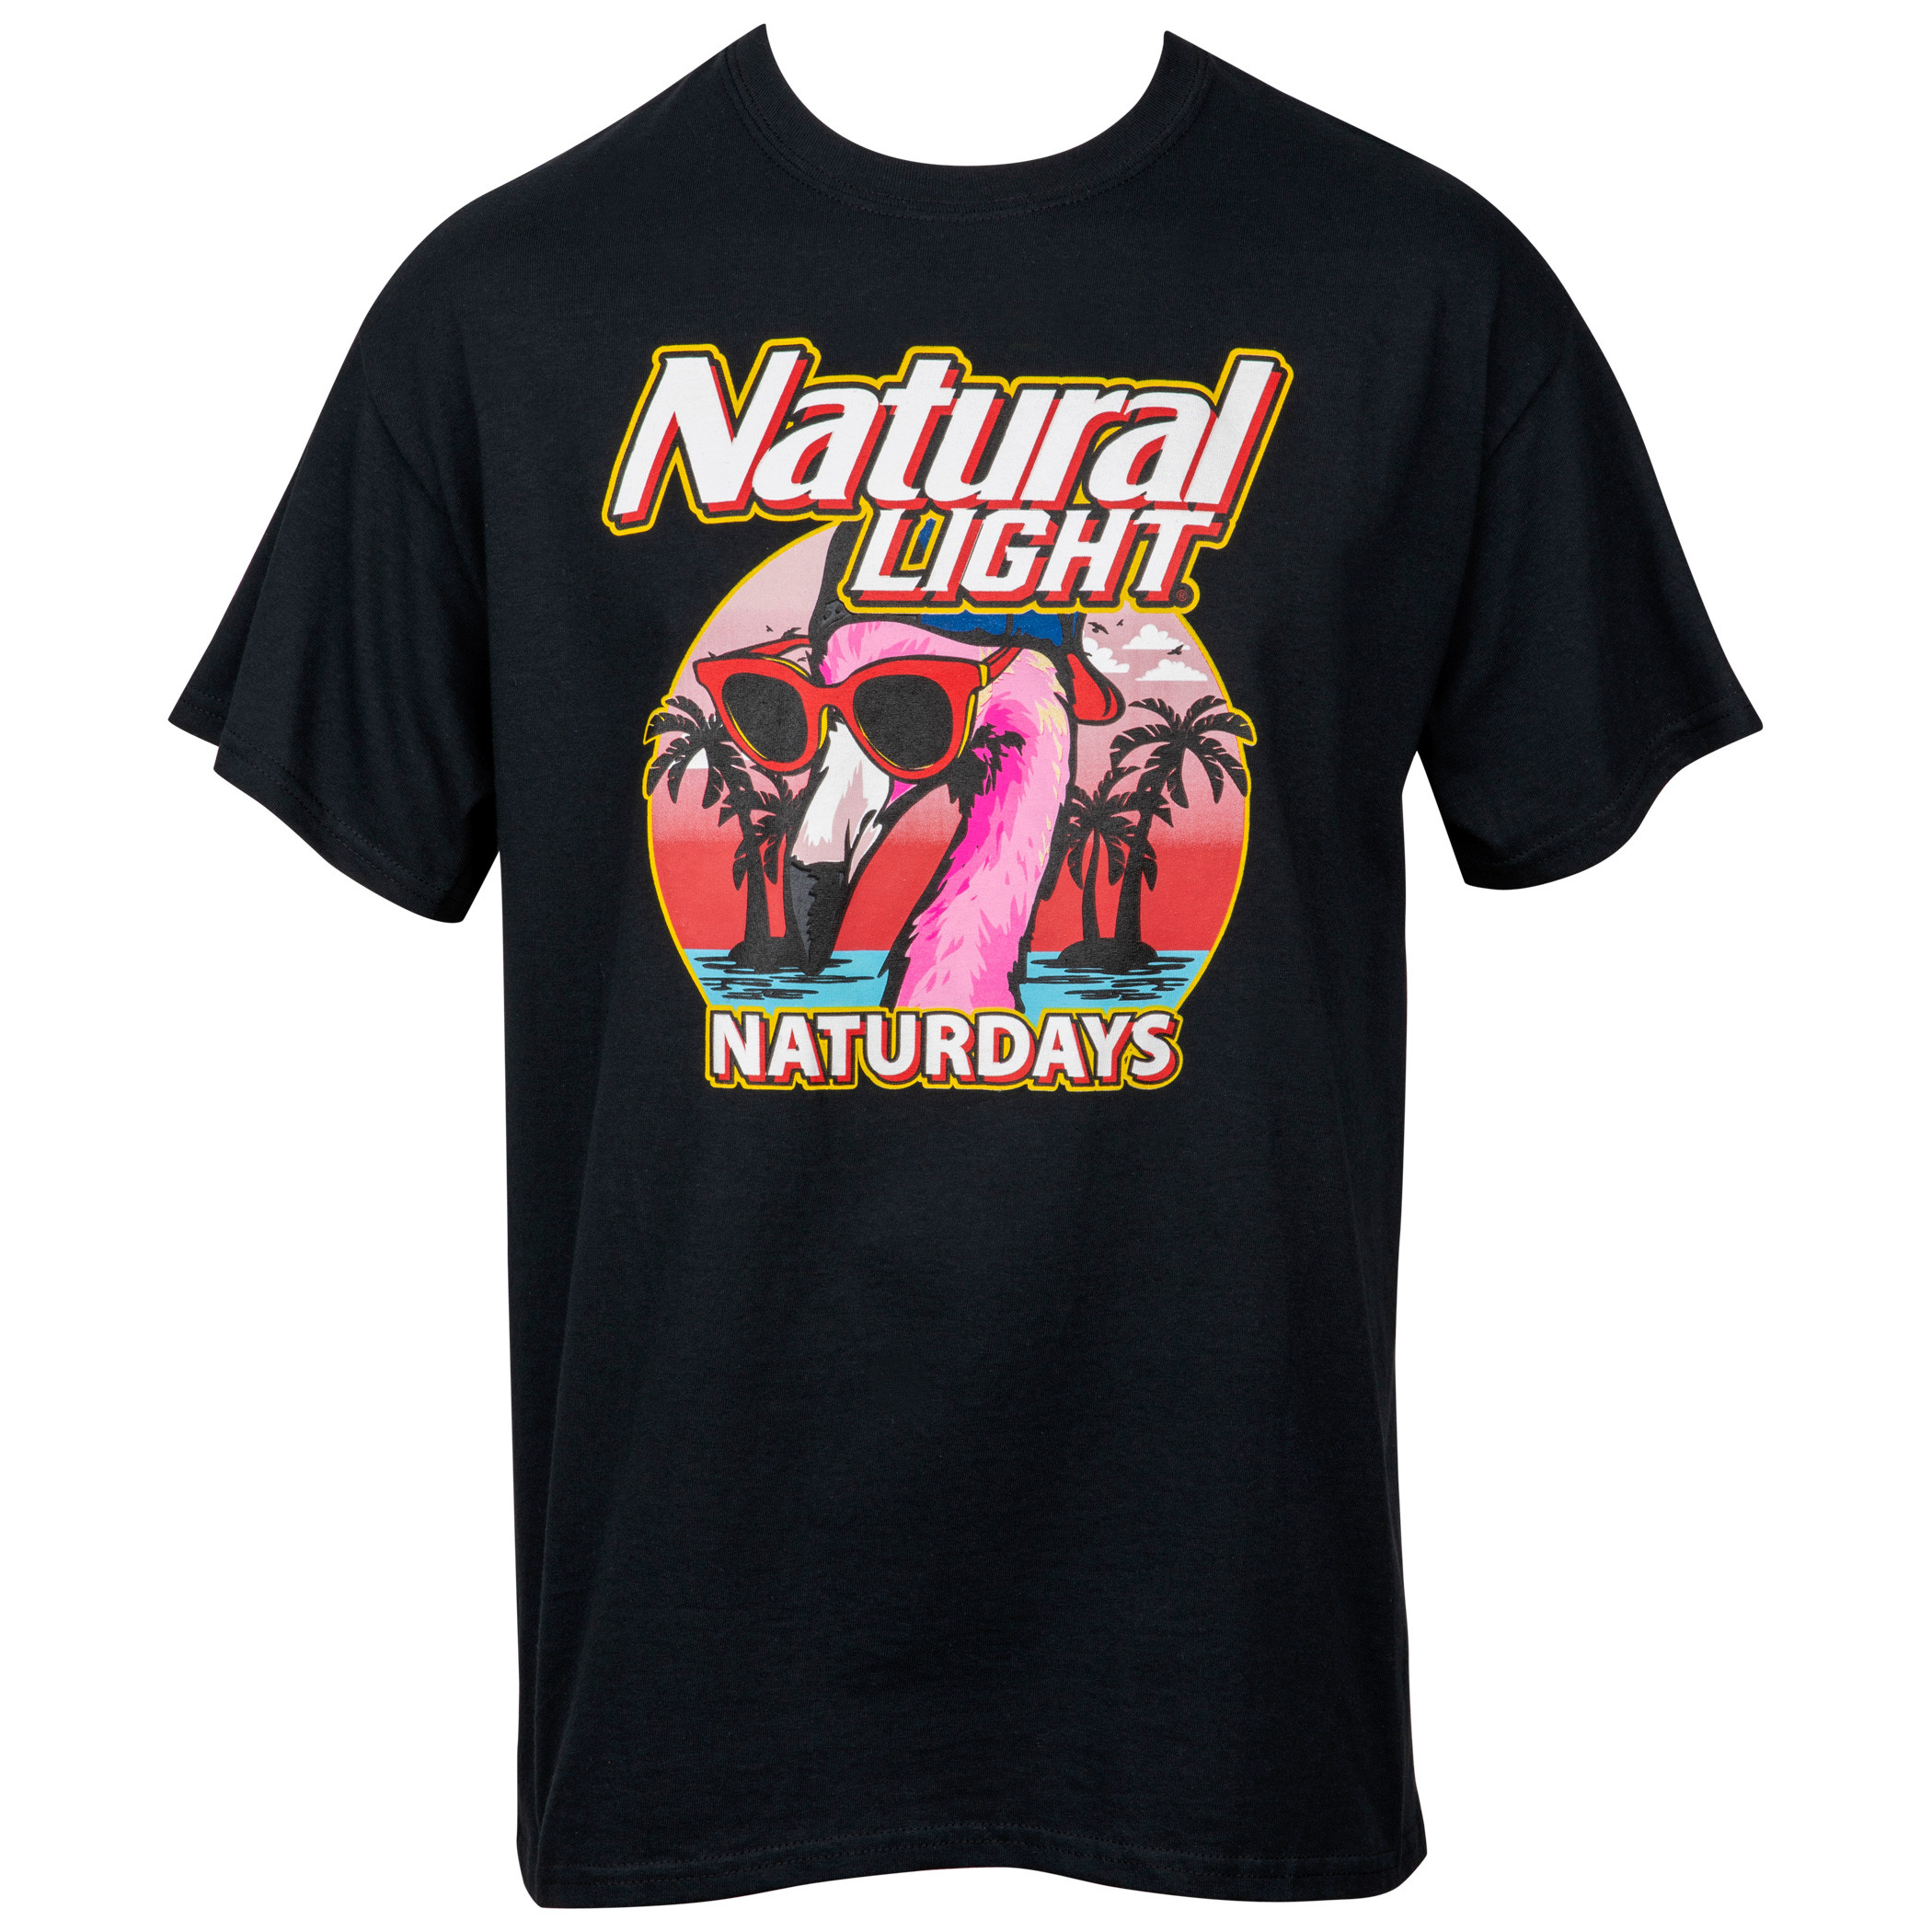 Natural Light You Party Naturdays T-Shirt